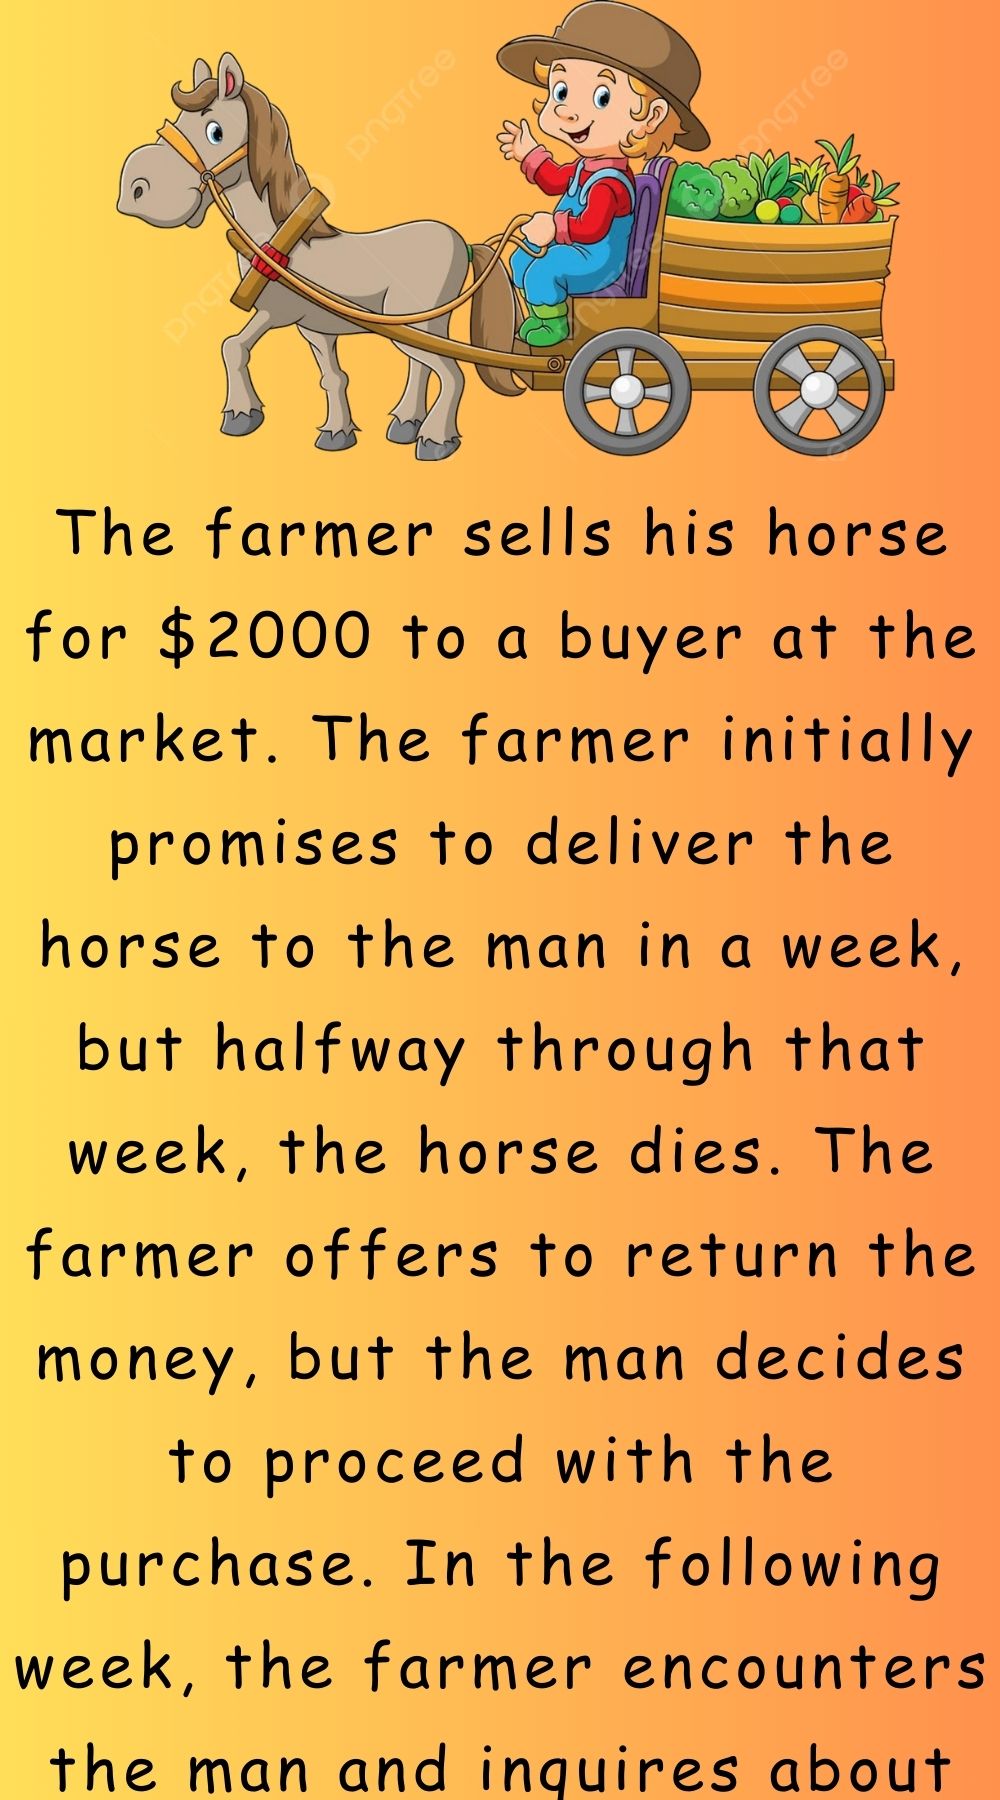 The farmer sells his horse